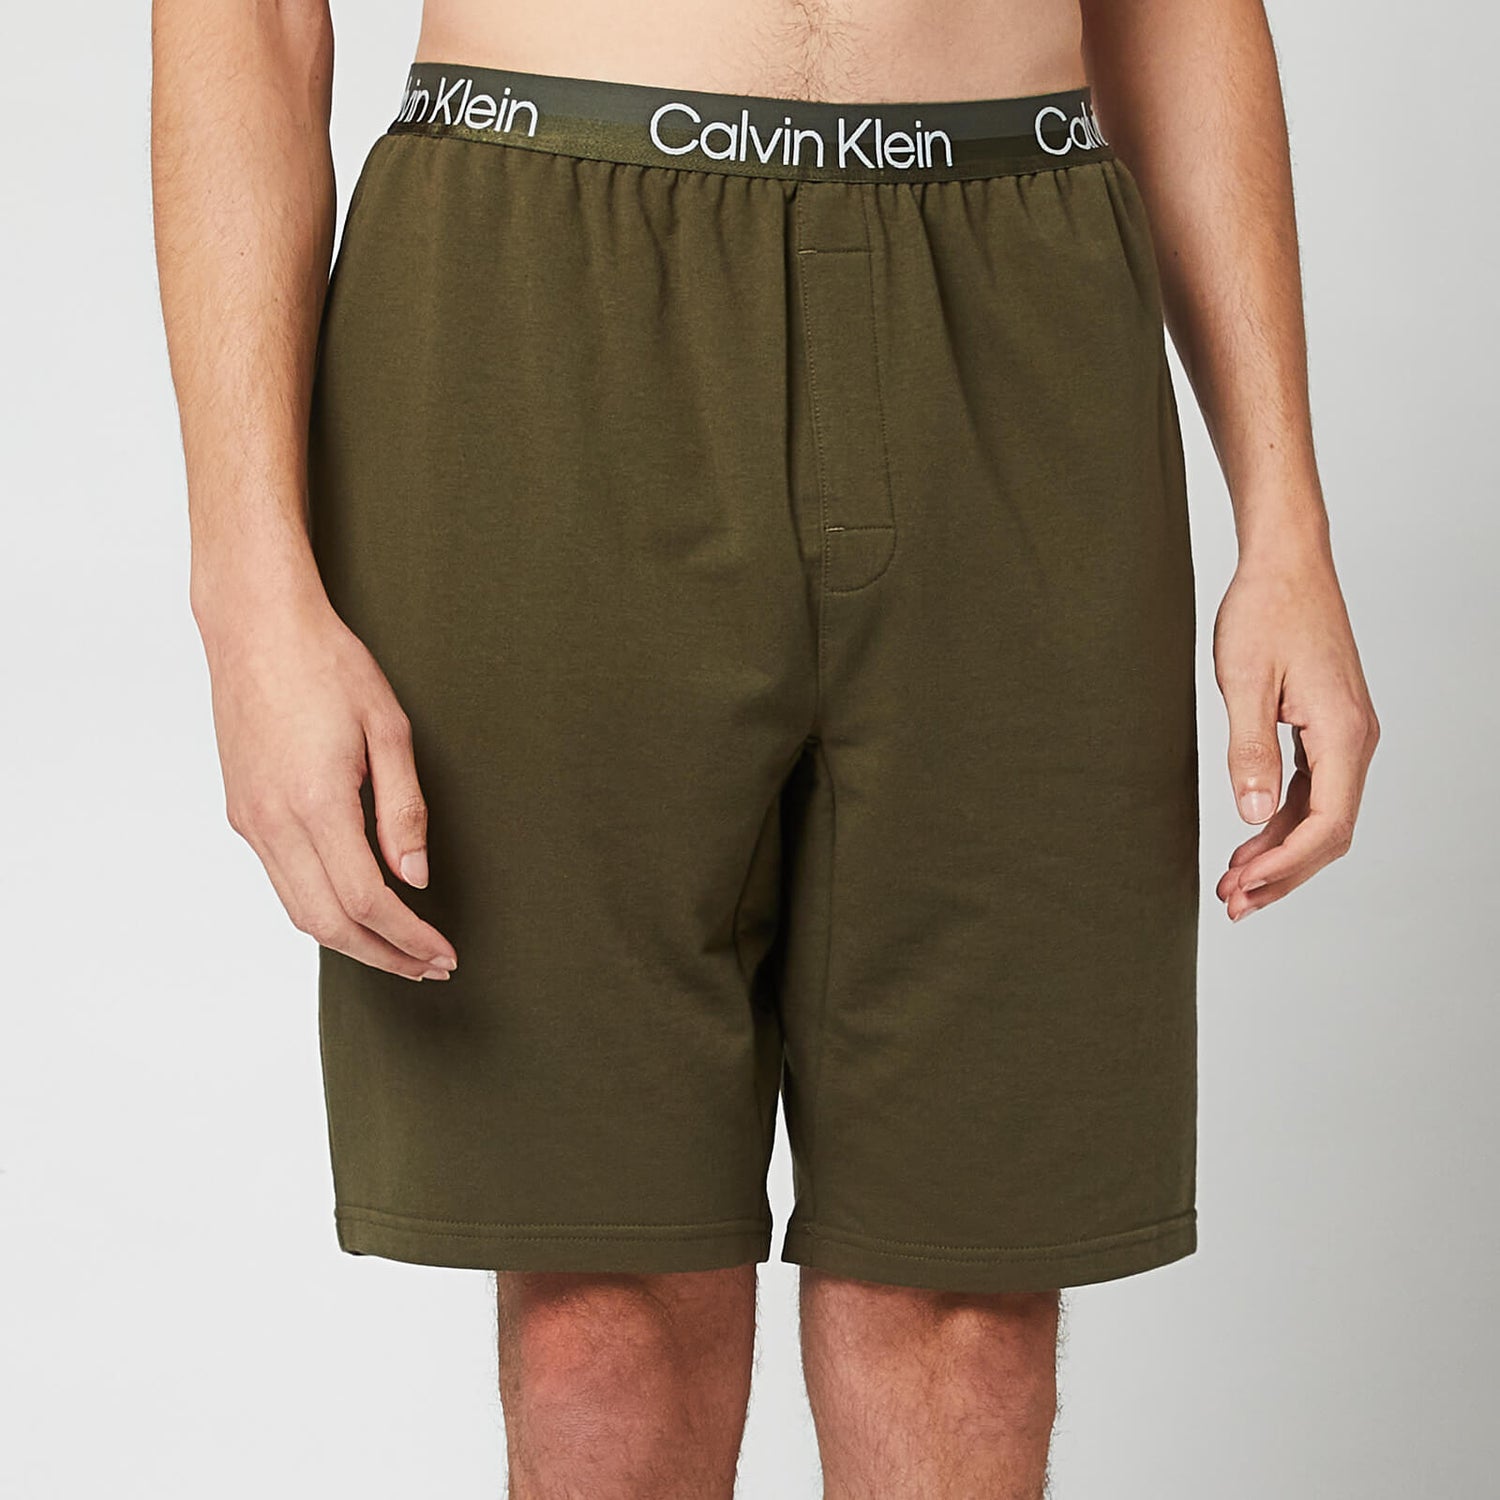 Calvin Klein Men's Sleep Shorts - Army Green - L